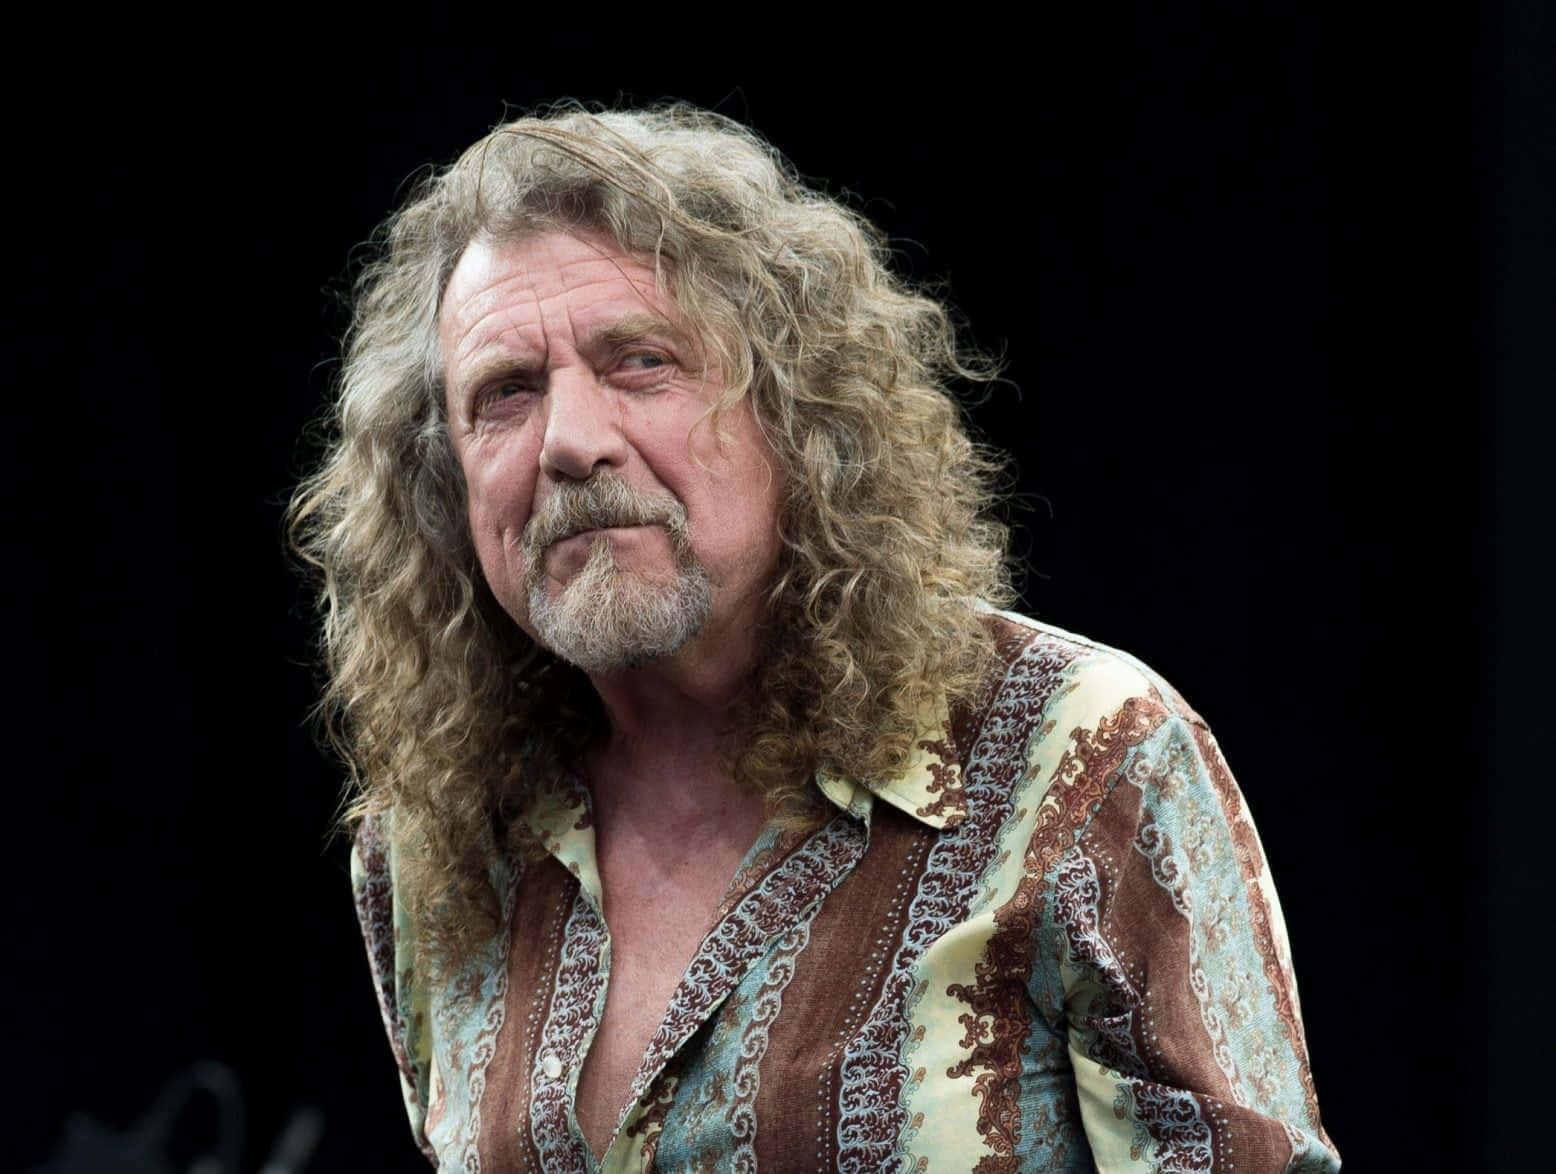 Legendariskarockikonen Robert Plant